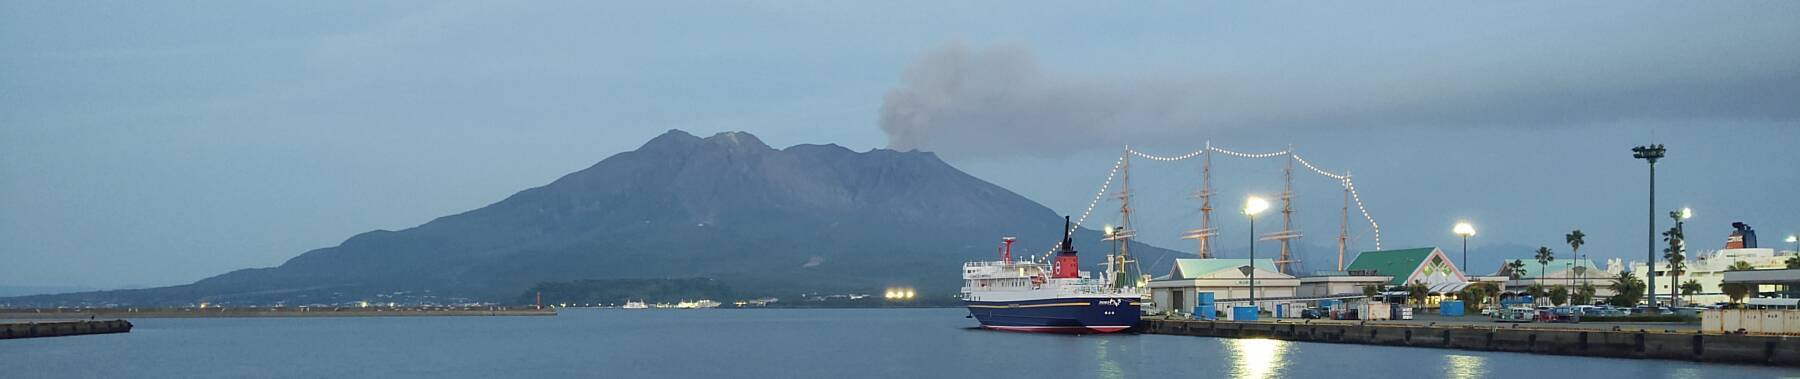 Ash plume rising from Sakurajima in the early evening, seen from Kagoshima's harbor.